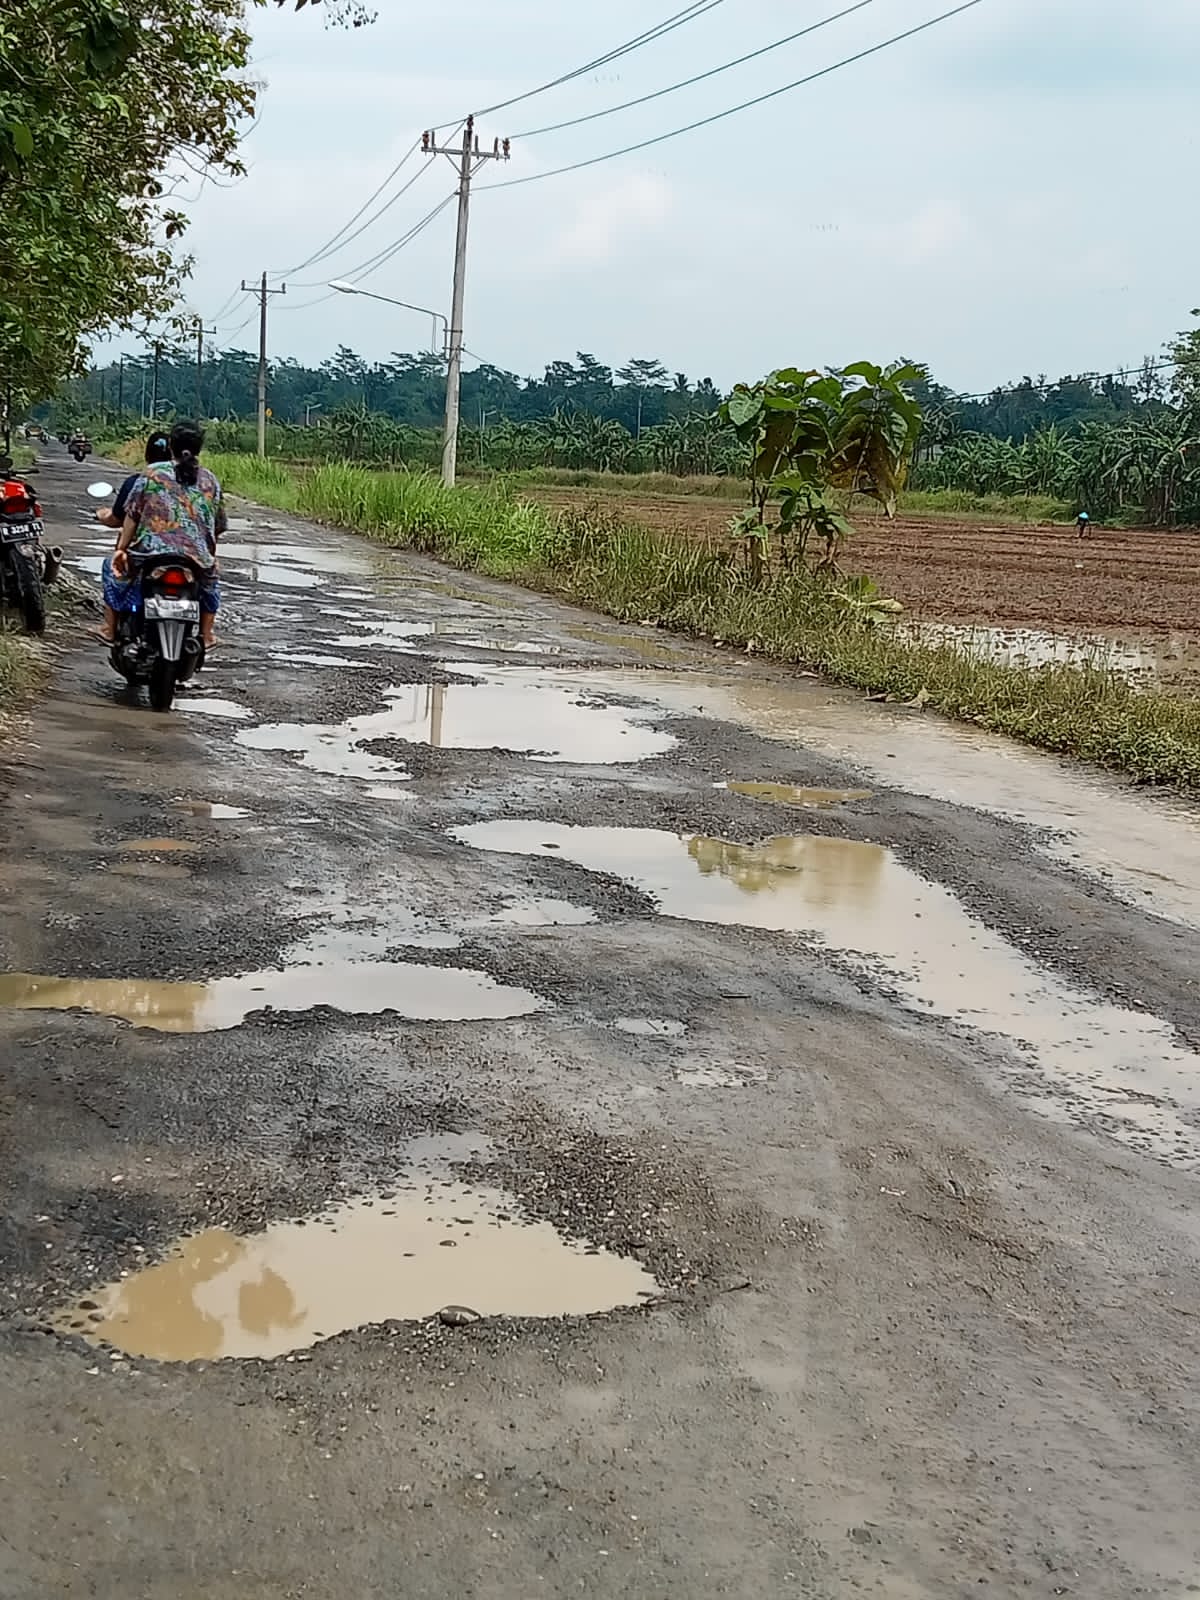 Jalan Kabupaten Desa Kemangkon Yang Terletak di Dusun (2) dan (3) Sangat Memprihatinkan